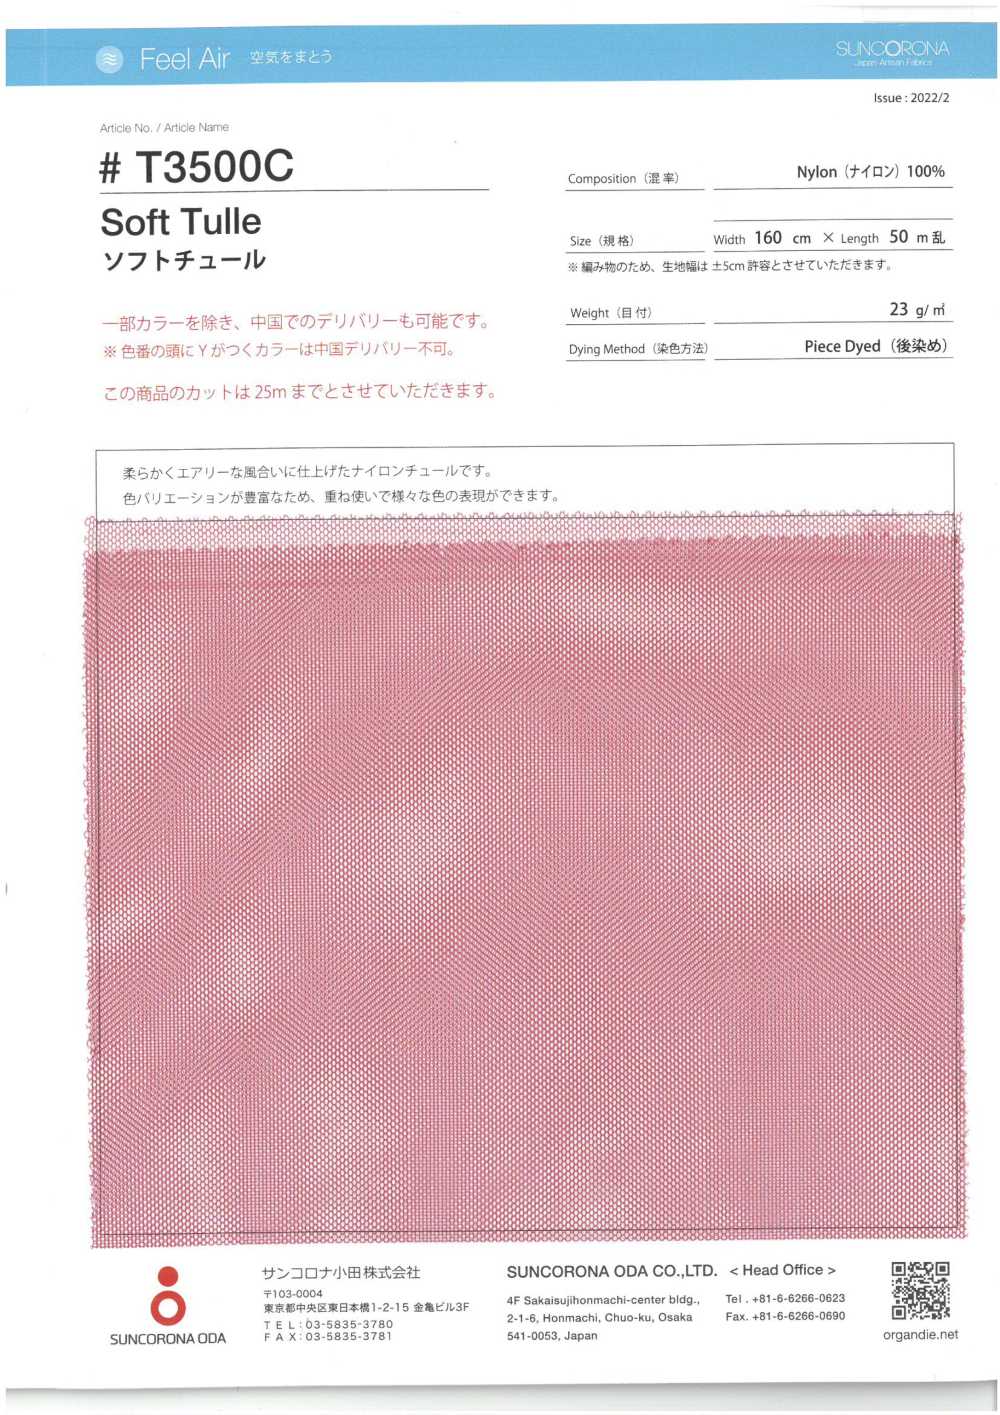 T3500C Tul Suave[Fabrica Textil] Suncorona Oda